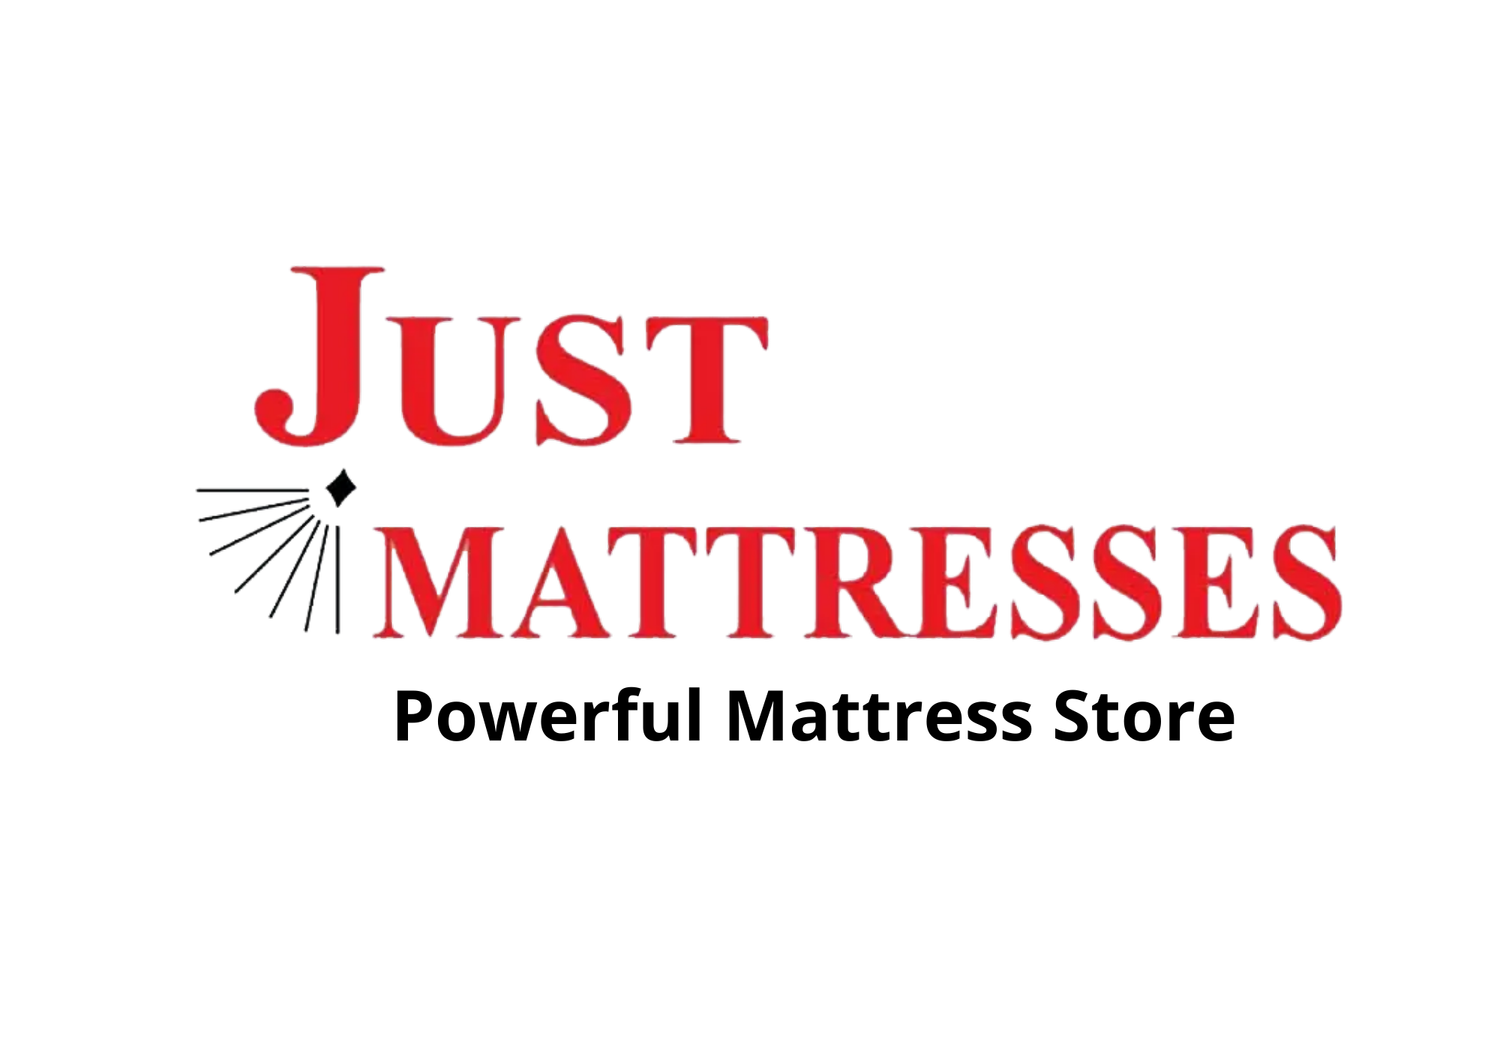 Just Mattresses